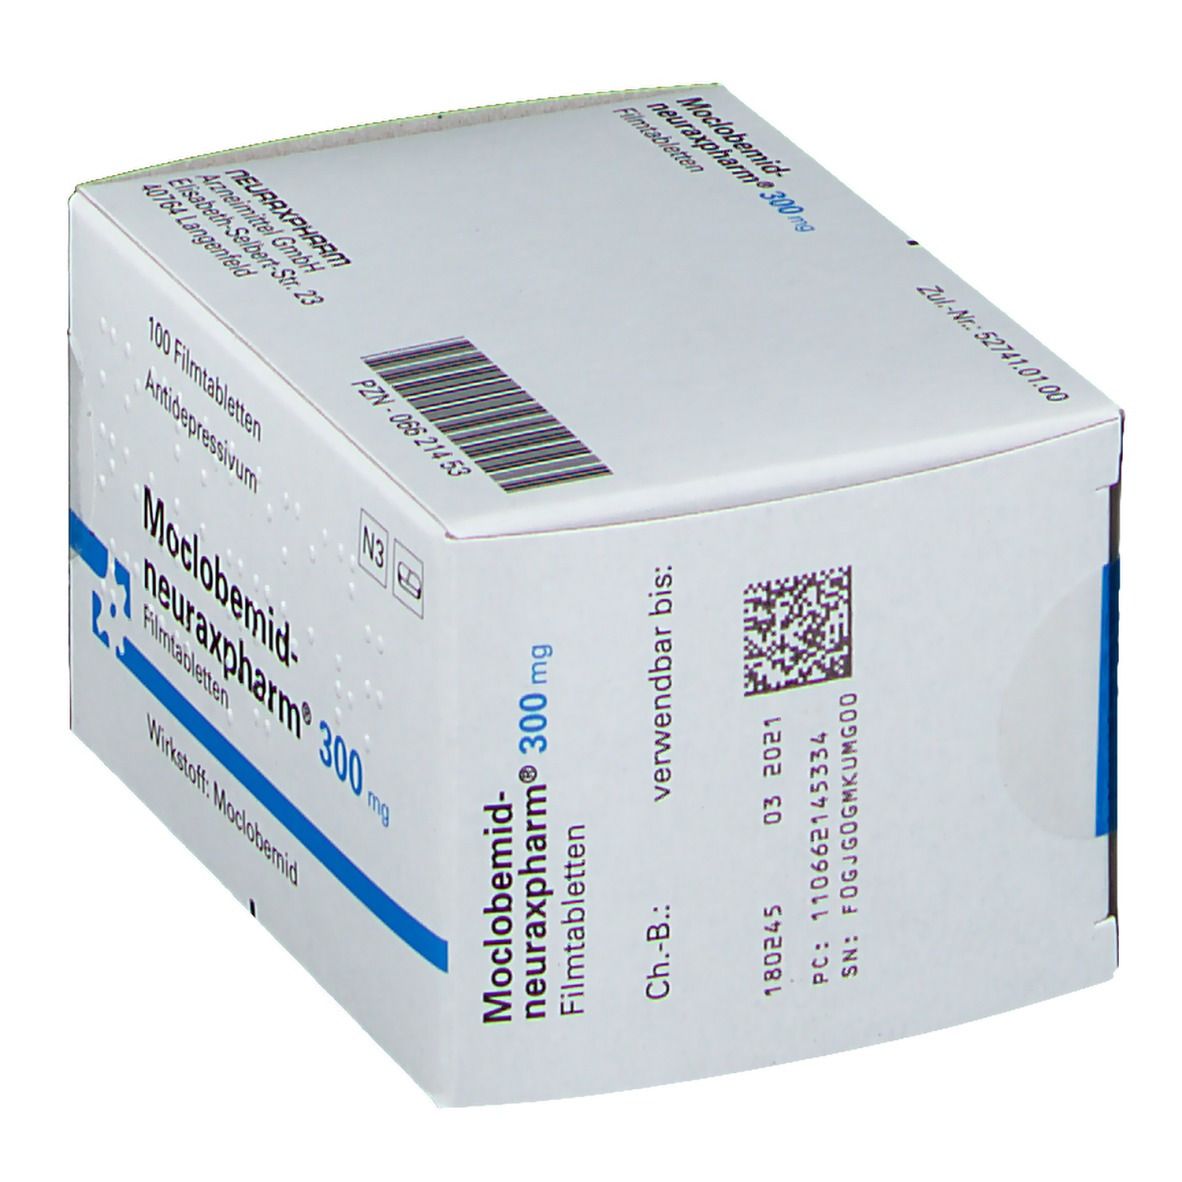 Moclobemid-neuraxpharm® 300 mg